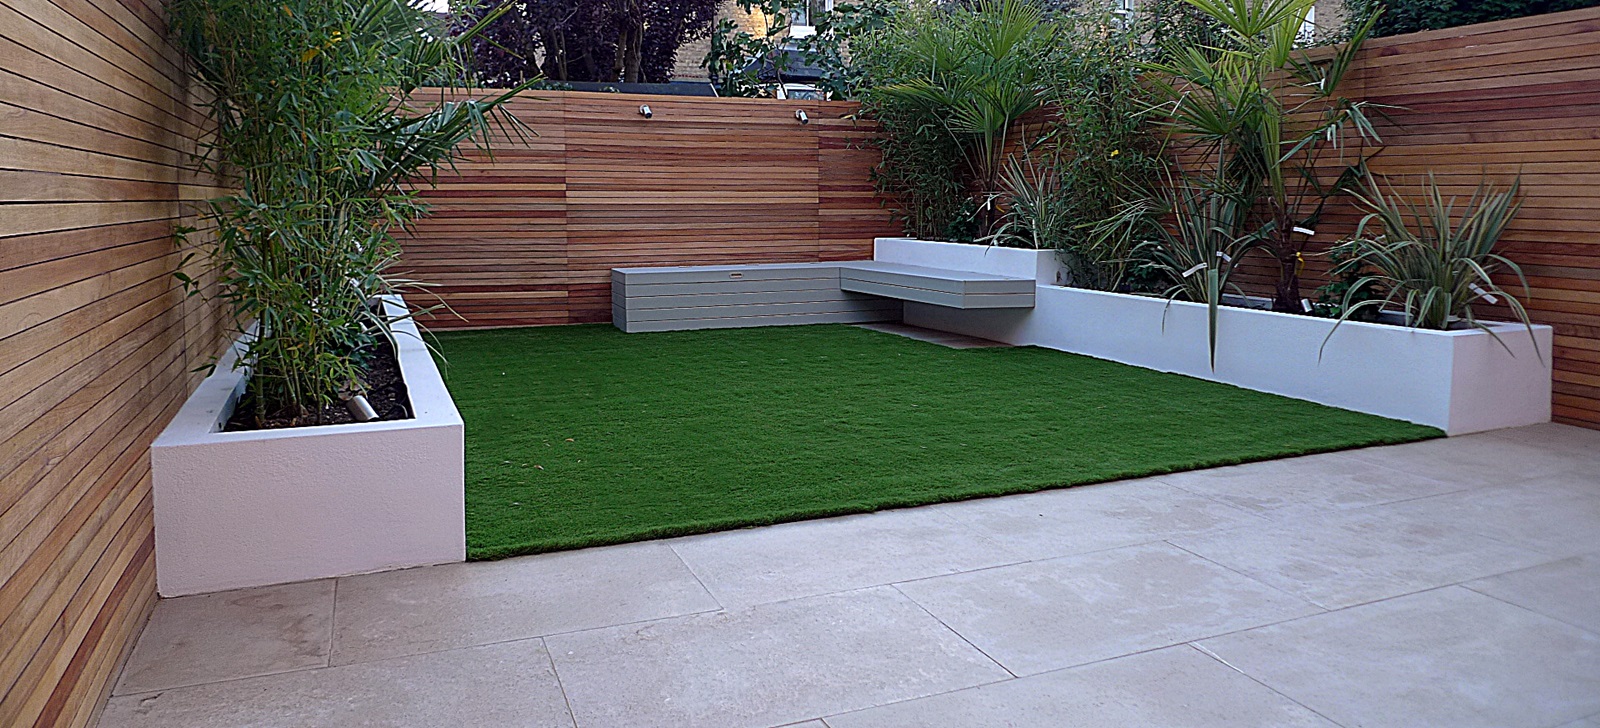 Trellis | London Garden Design - Part 5